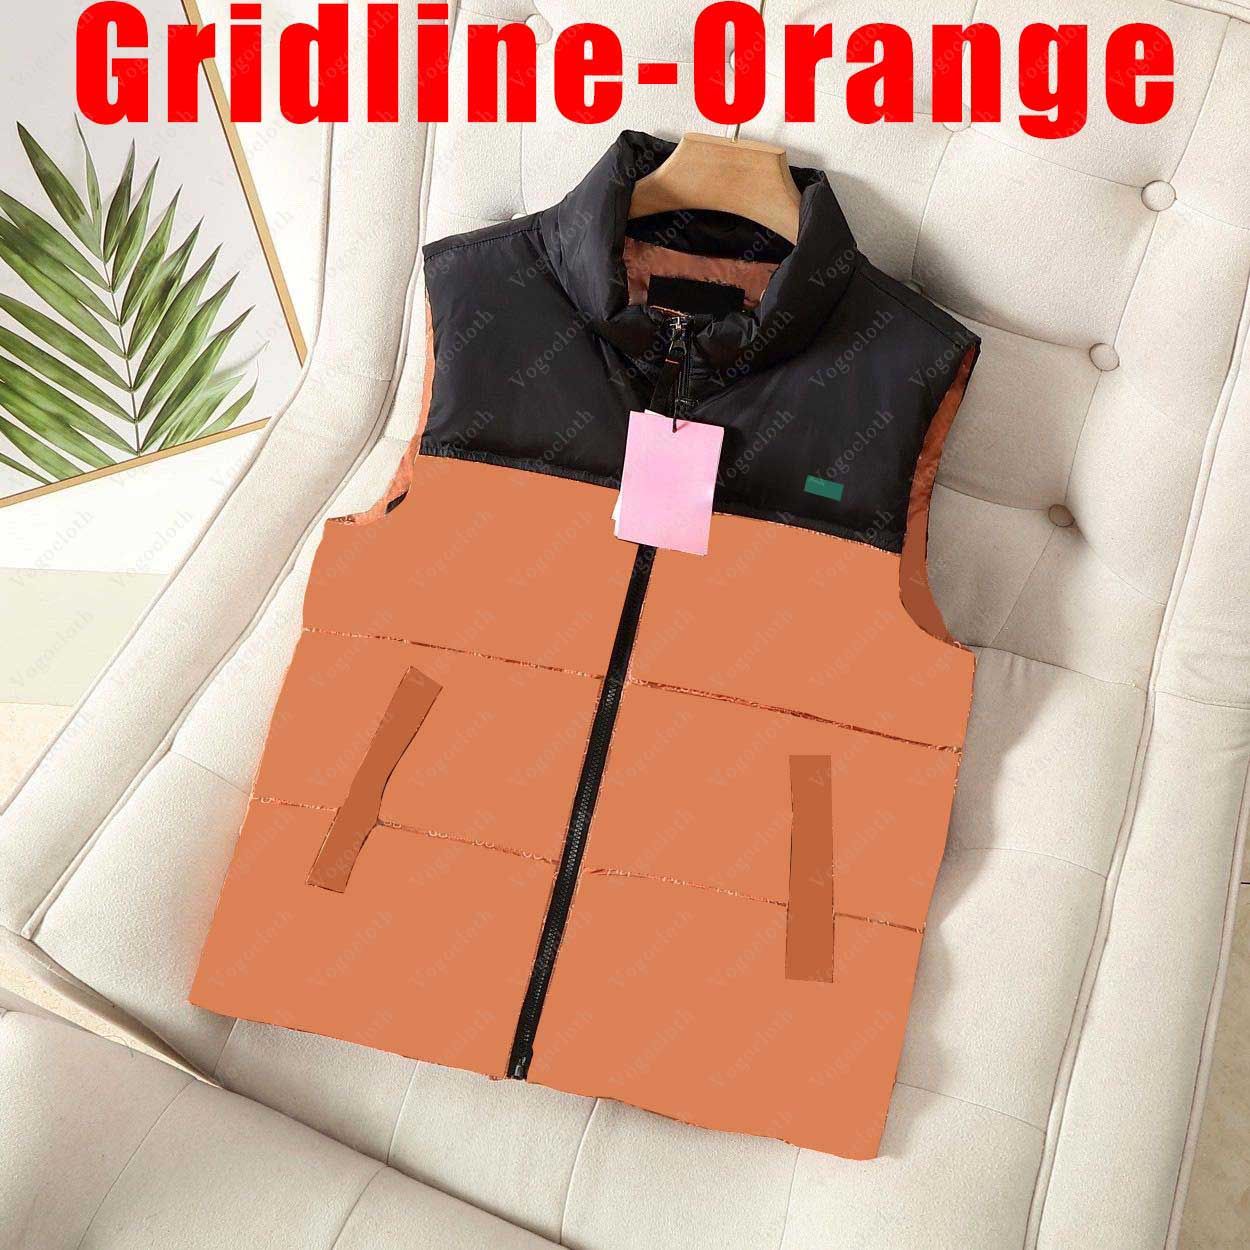 Gridline-Orange.